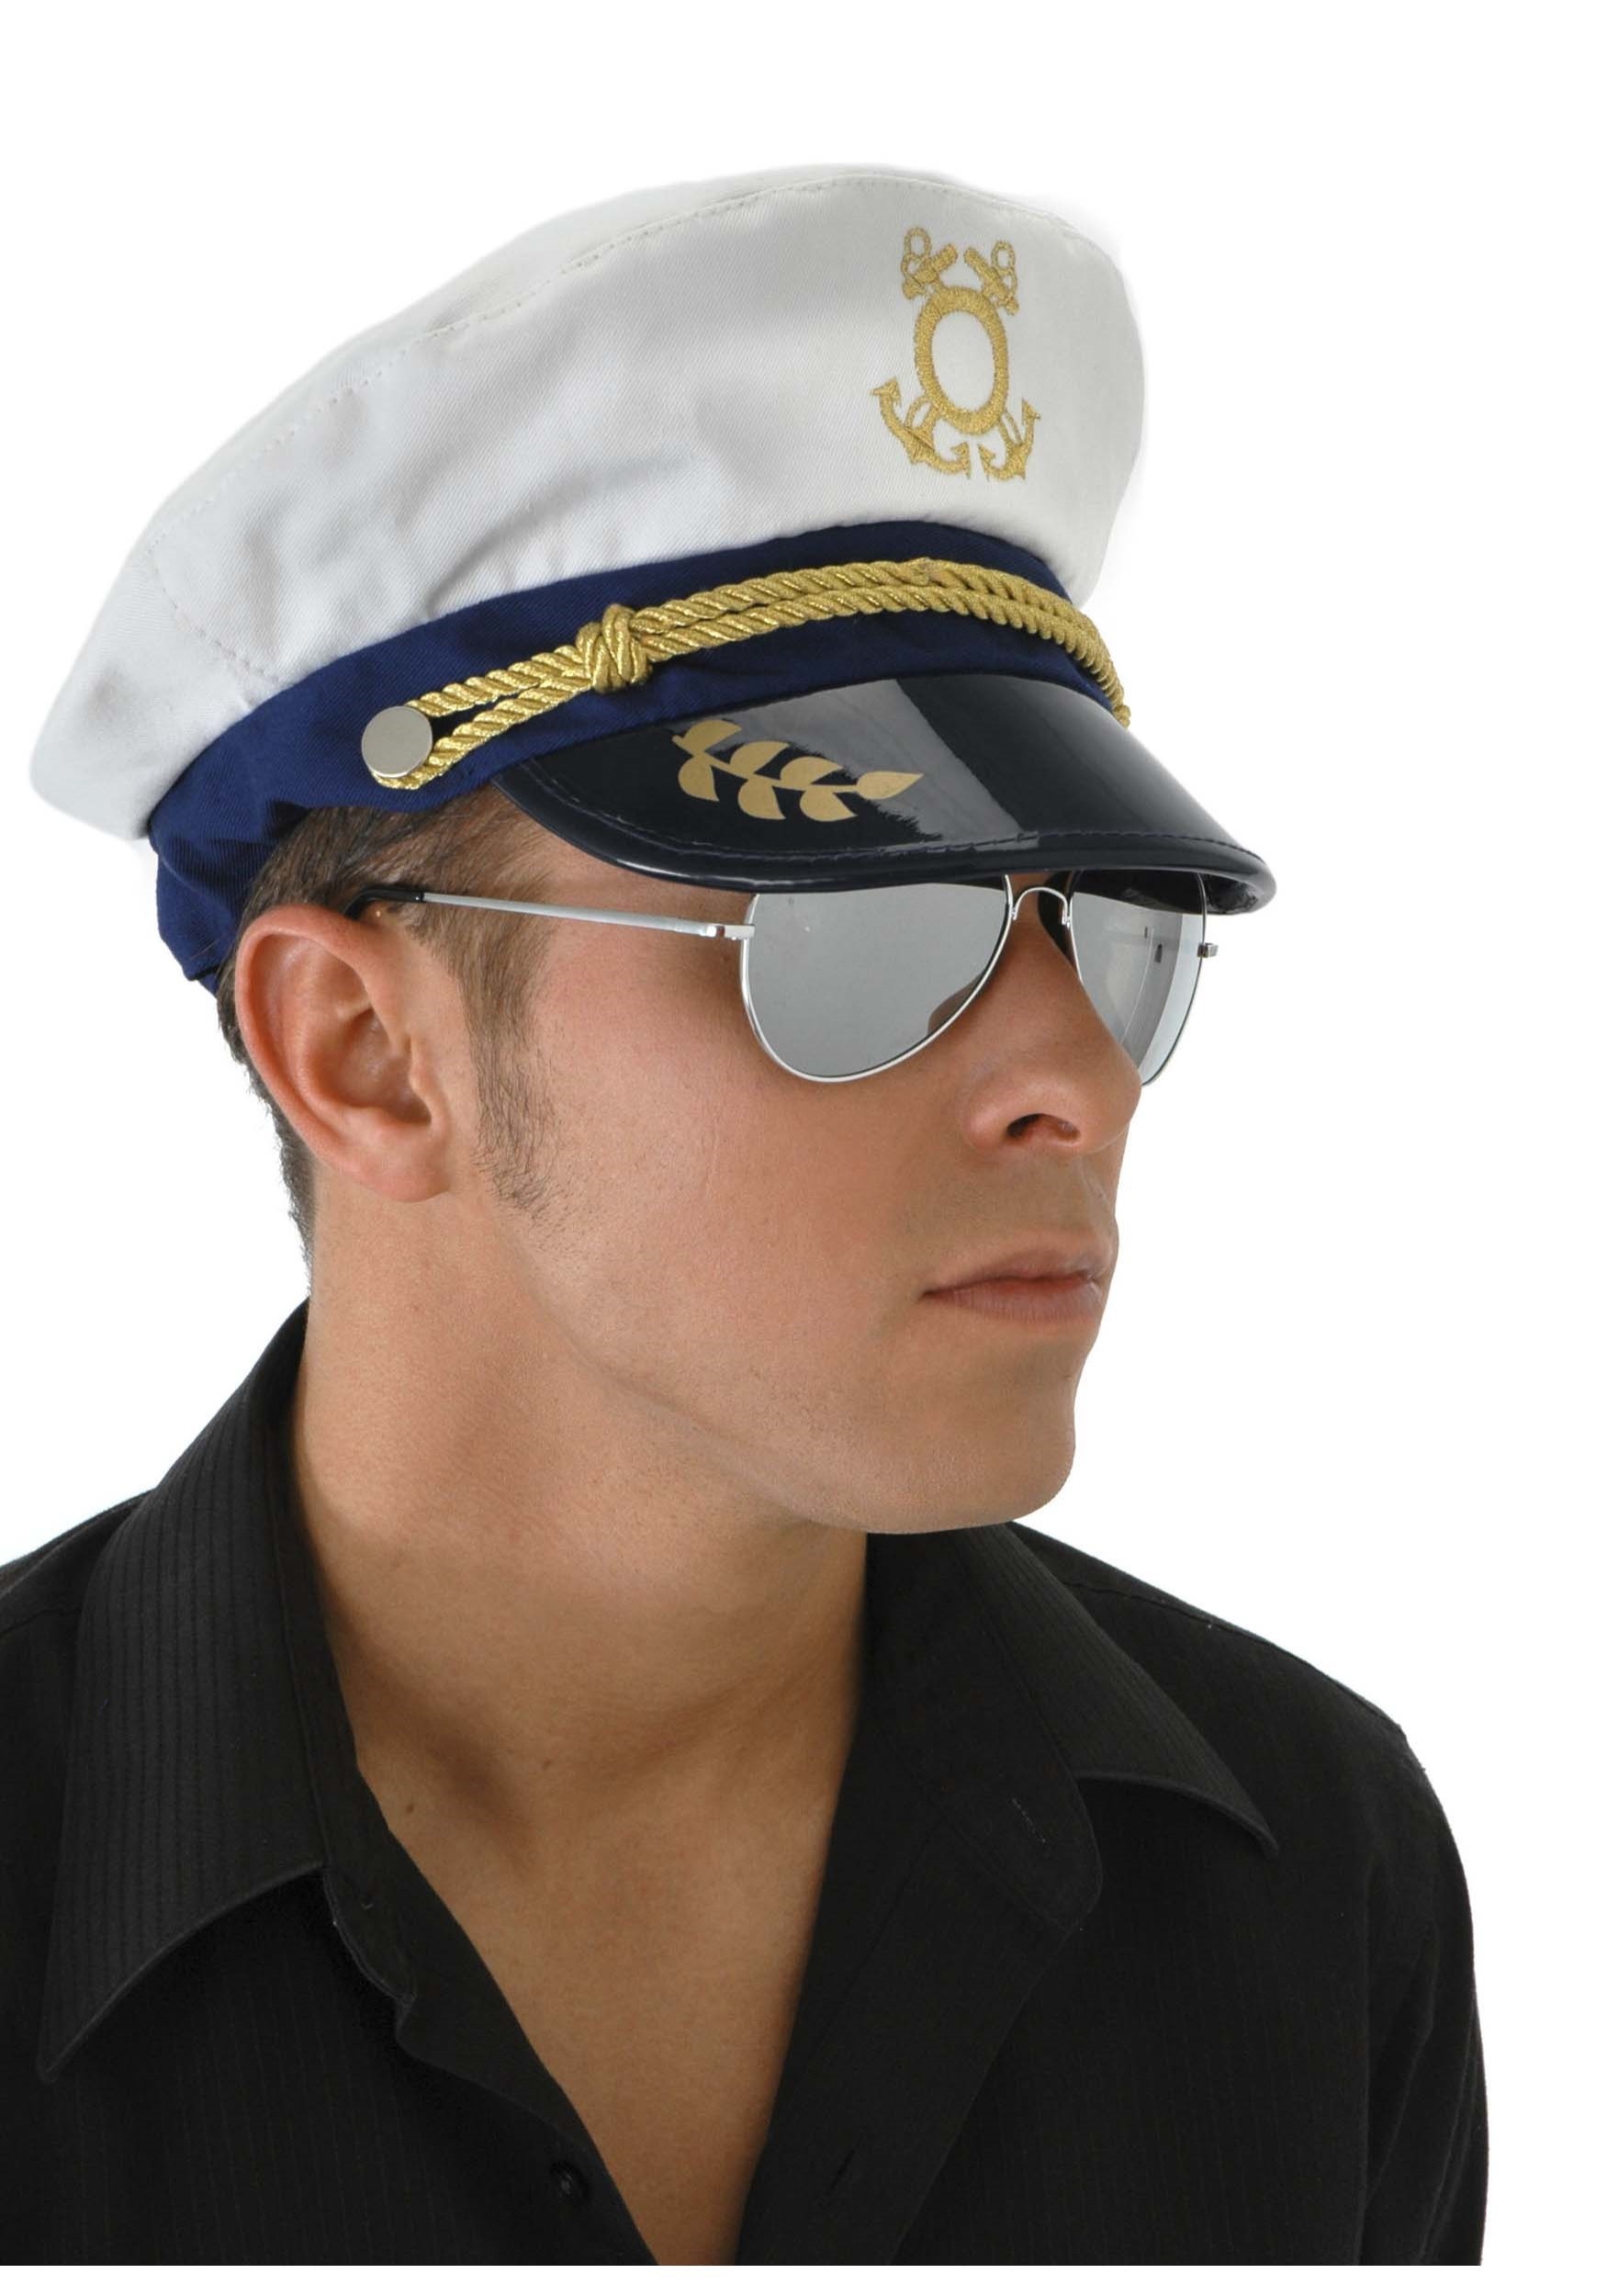 Vaizdo rezultatas pagal užklausą „hat for men sailor“